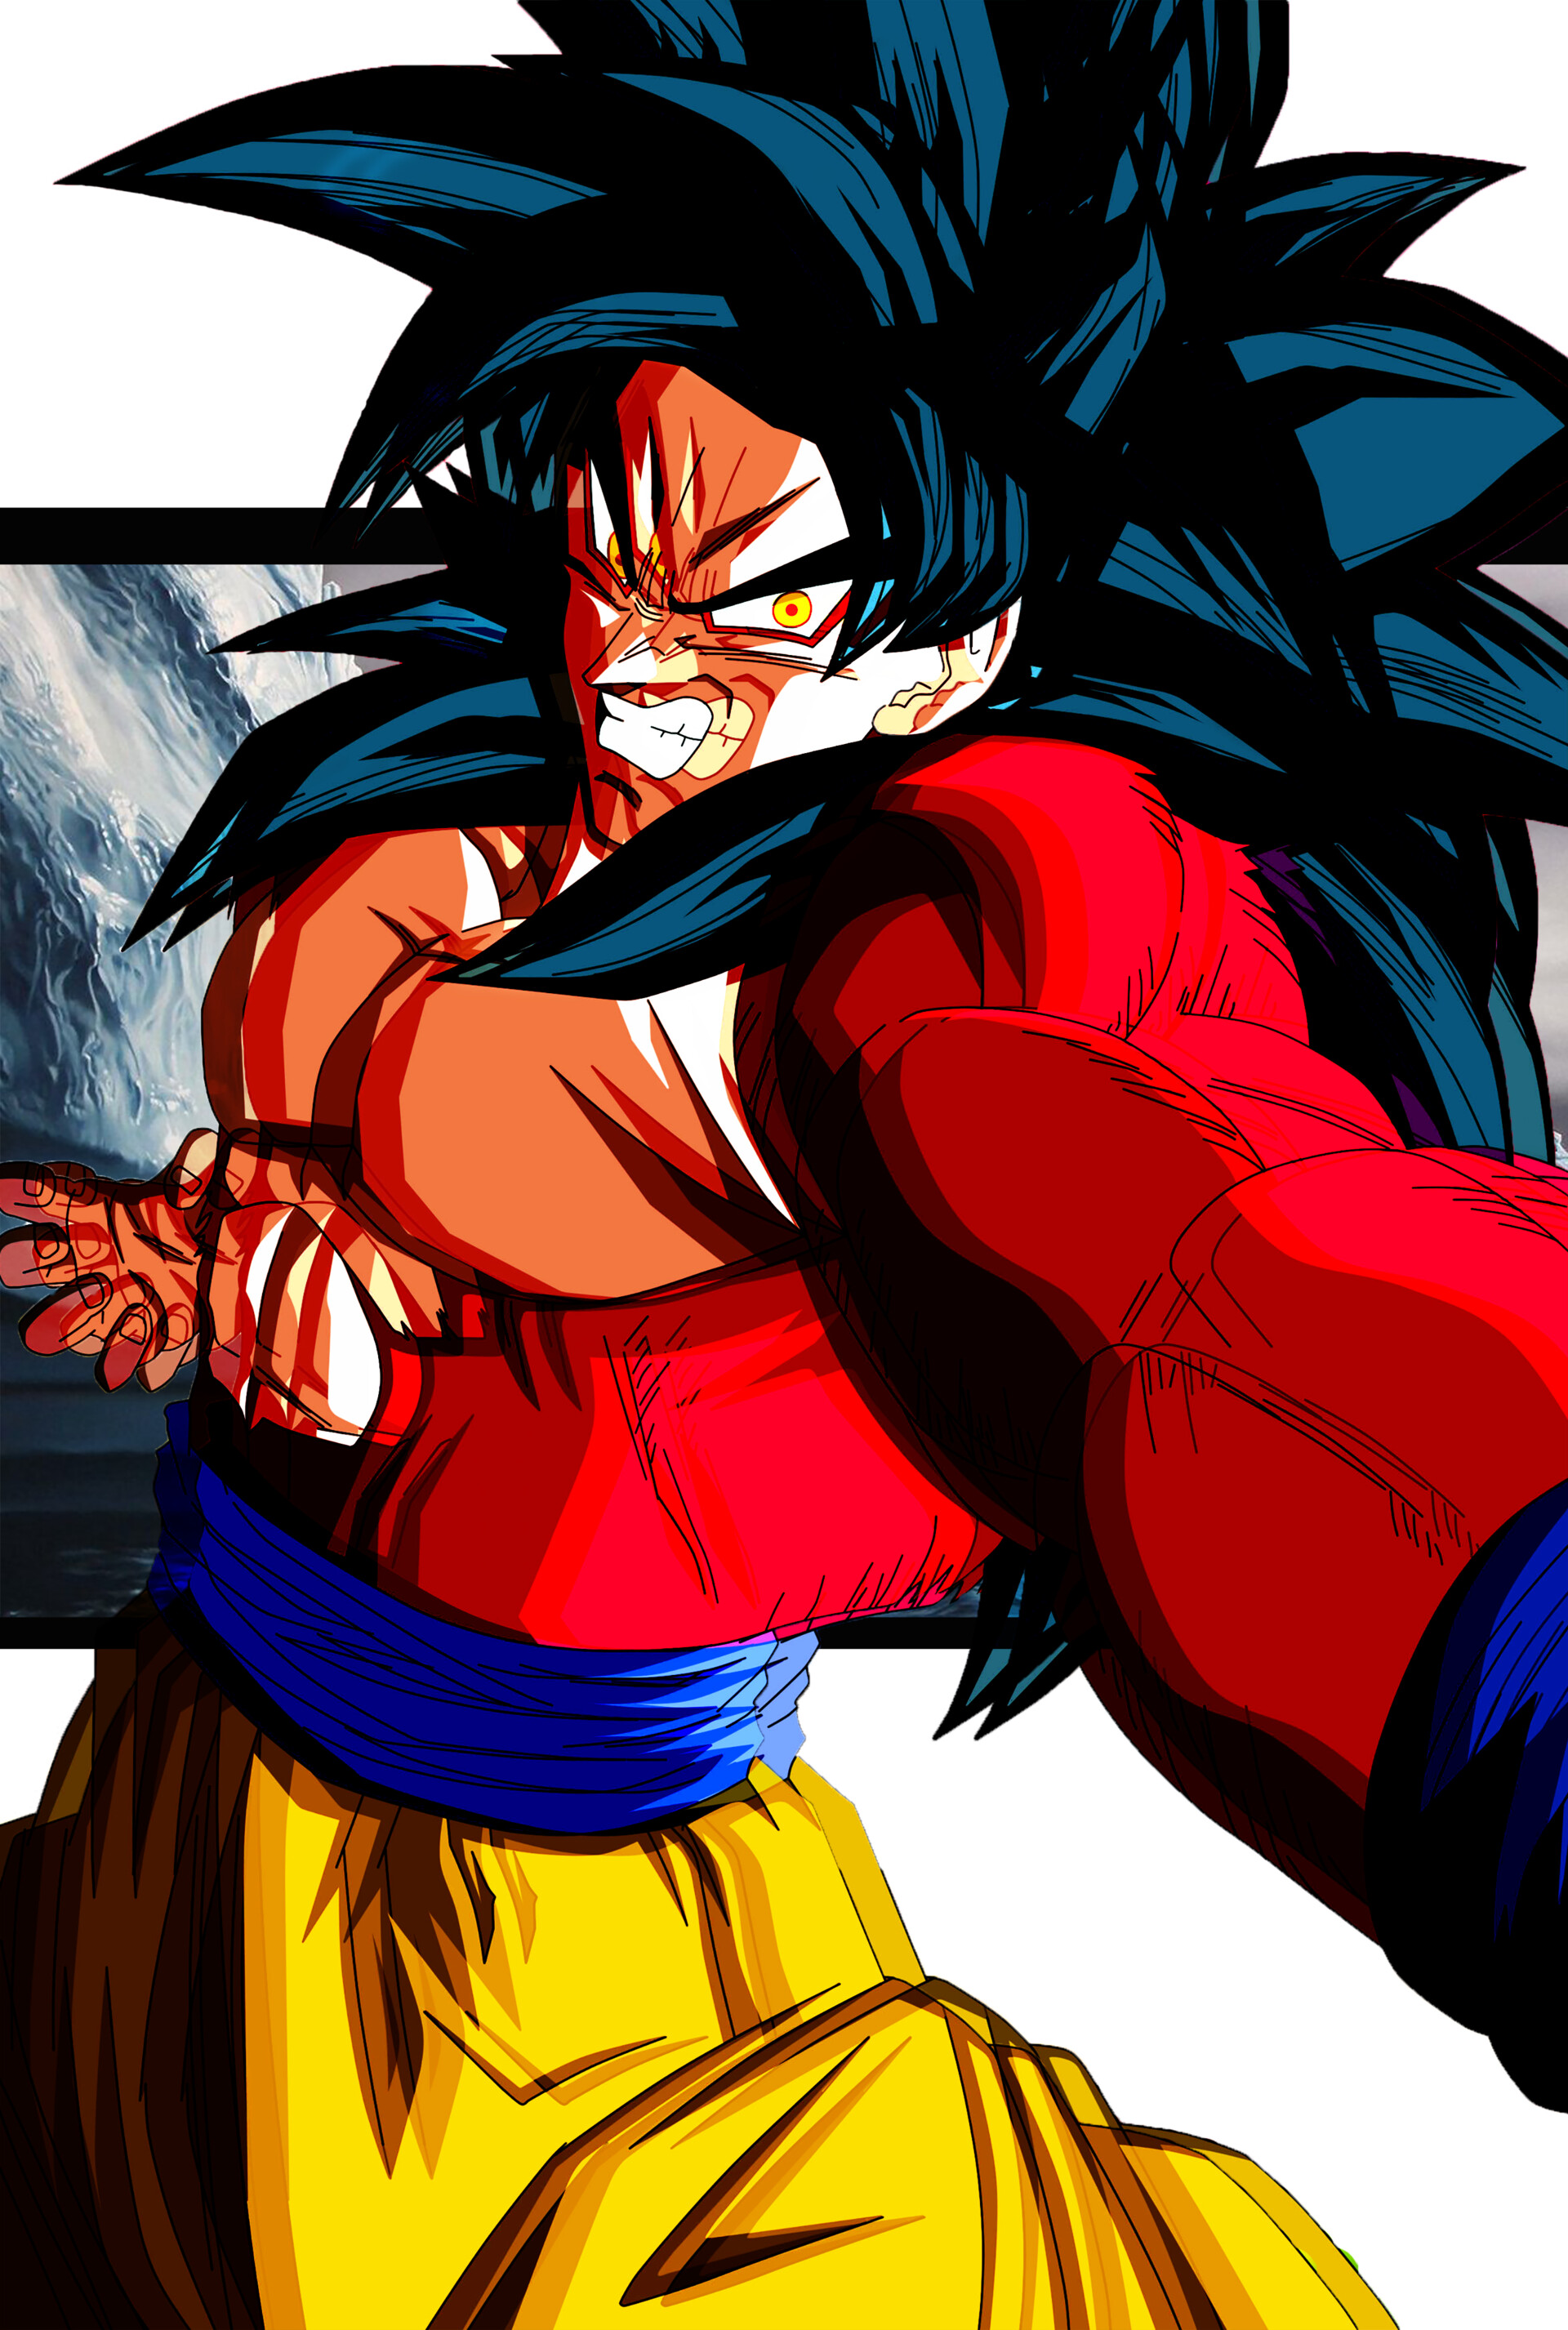 ArtStation - SSJ4 Goku